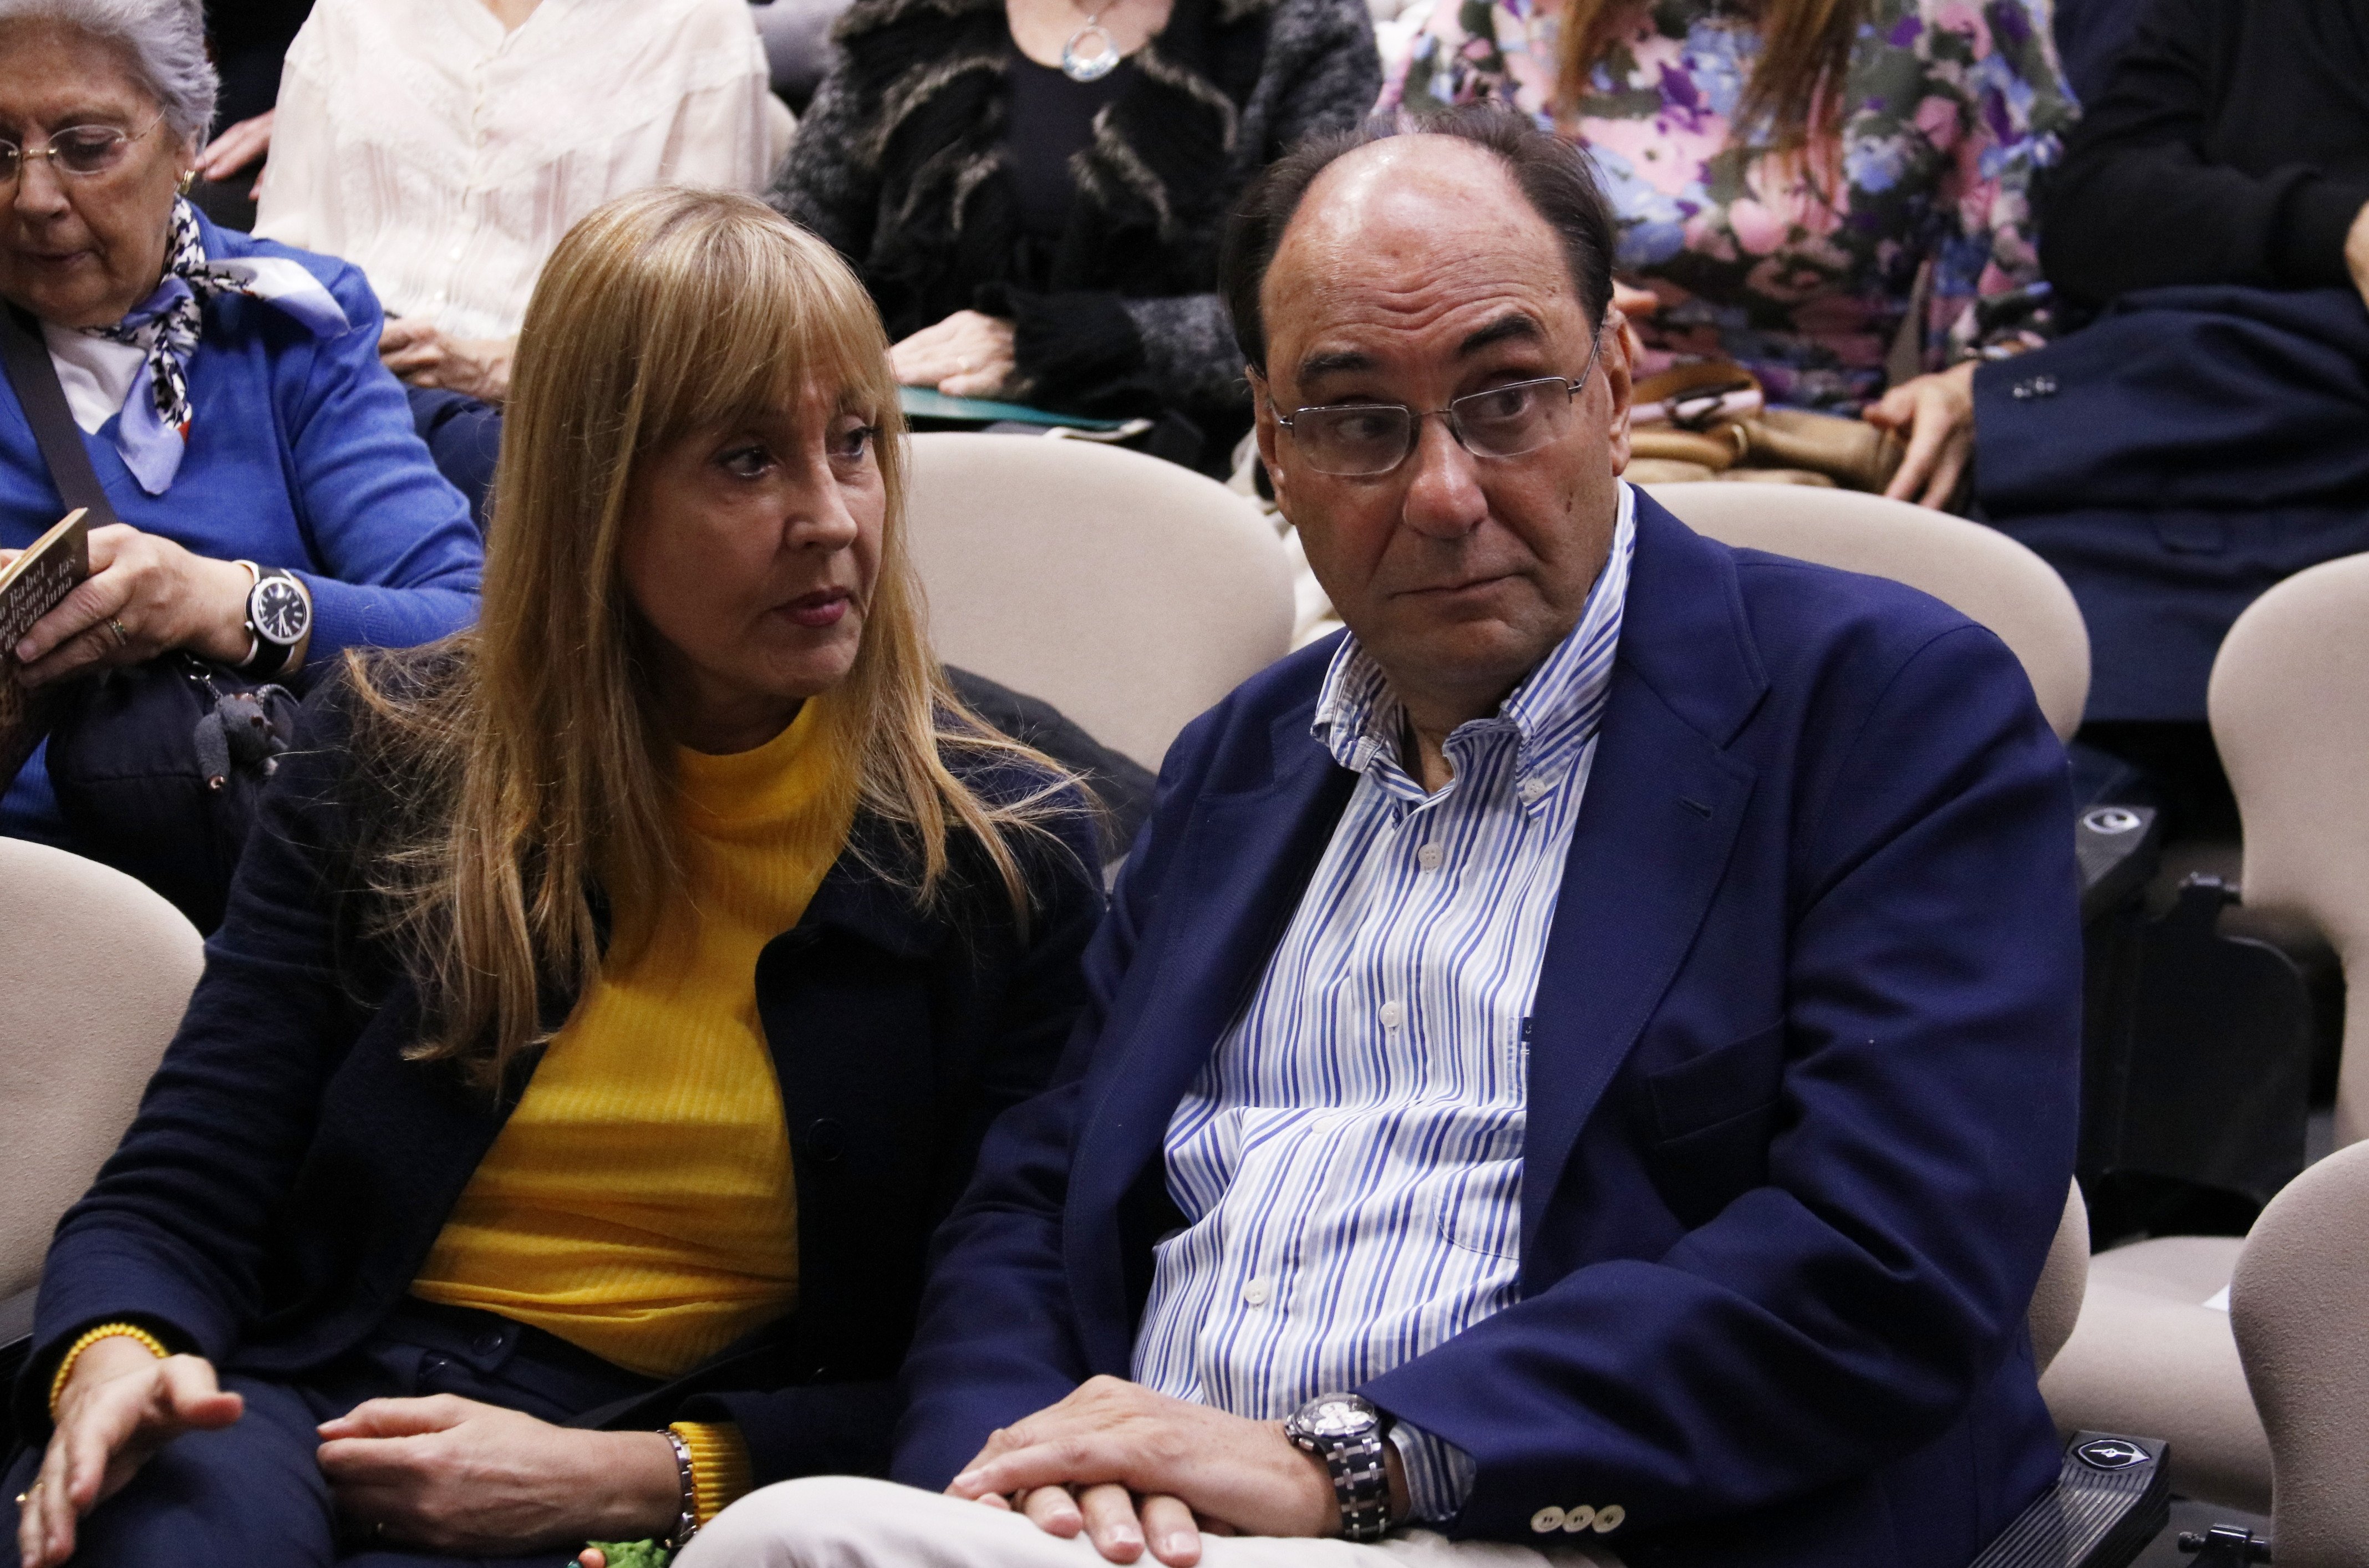 Disparan a la cara a Alejo Vidal-Quadras, exdiputado del PP, en Madrid, en medio de la calle Núñez de Balboa